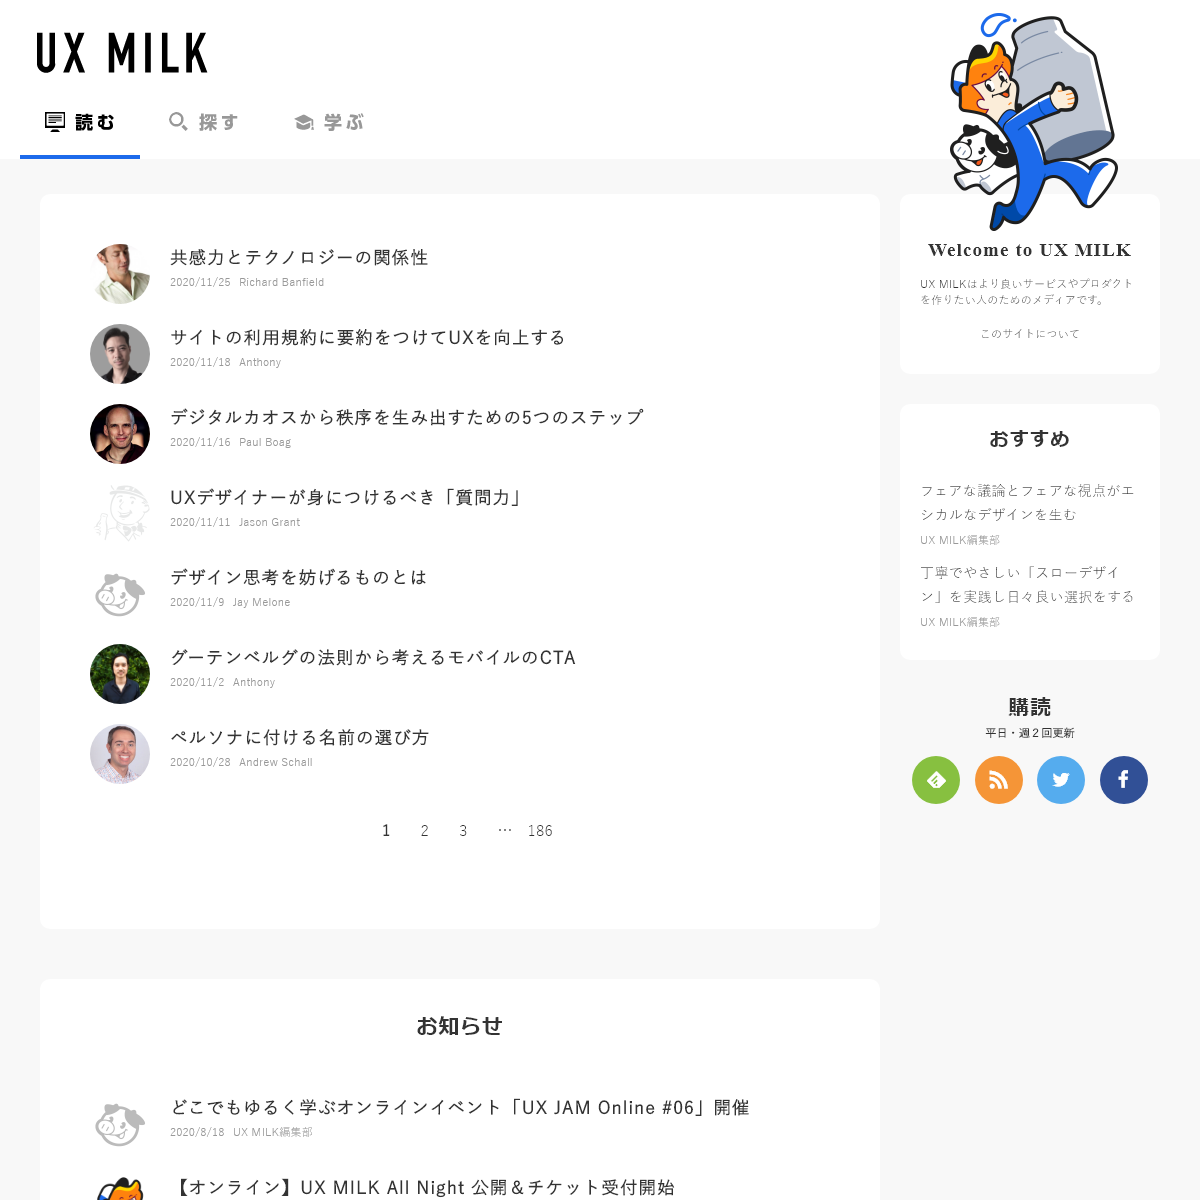 A complete backup of uxmilk.jp